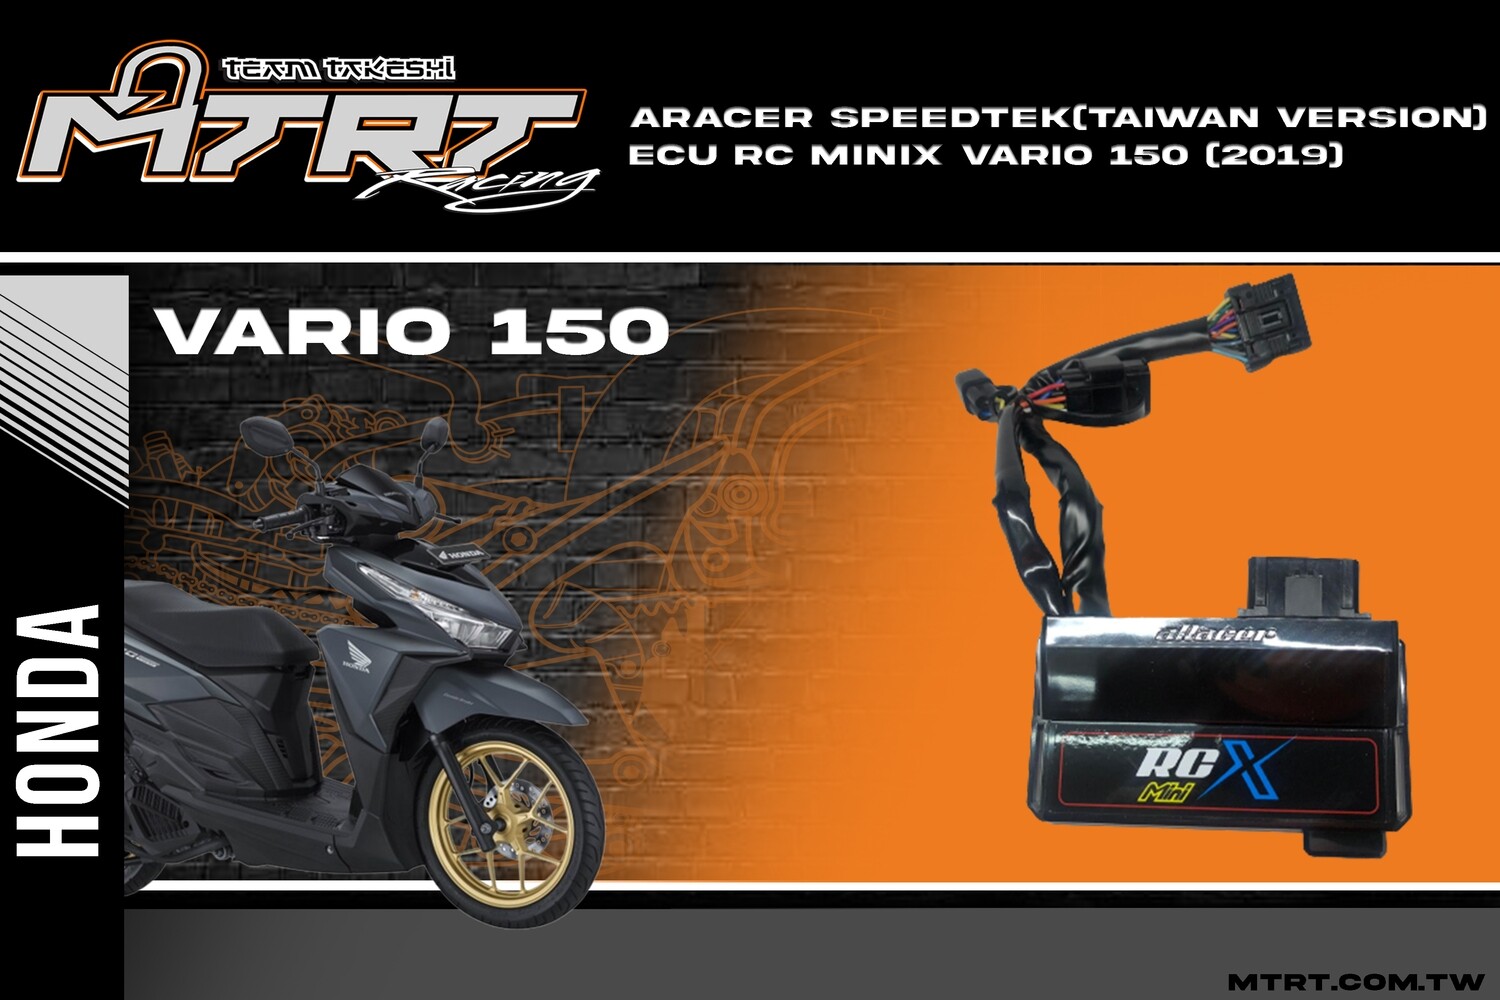 Aracer Speedtek (Taiwan Version) ECU RC MINI X VARIO 150 (2019)